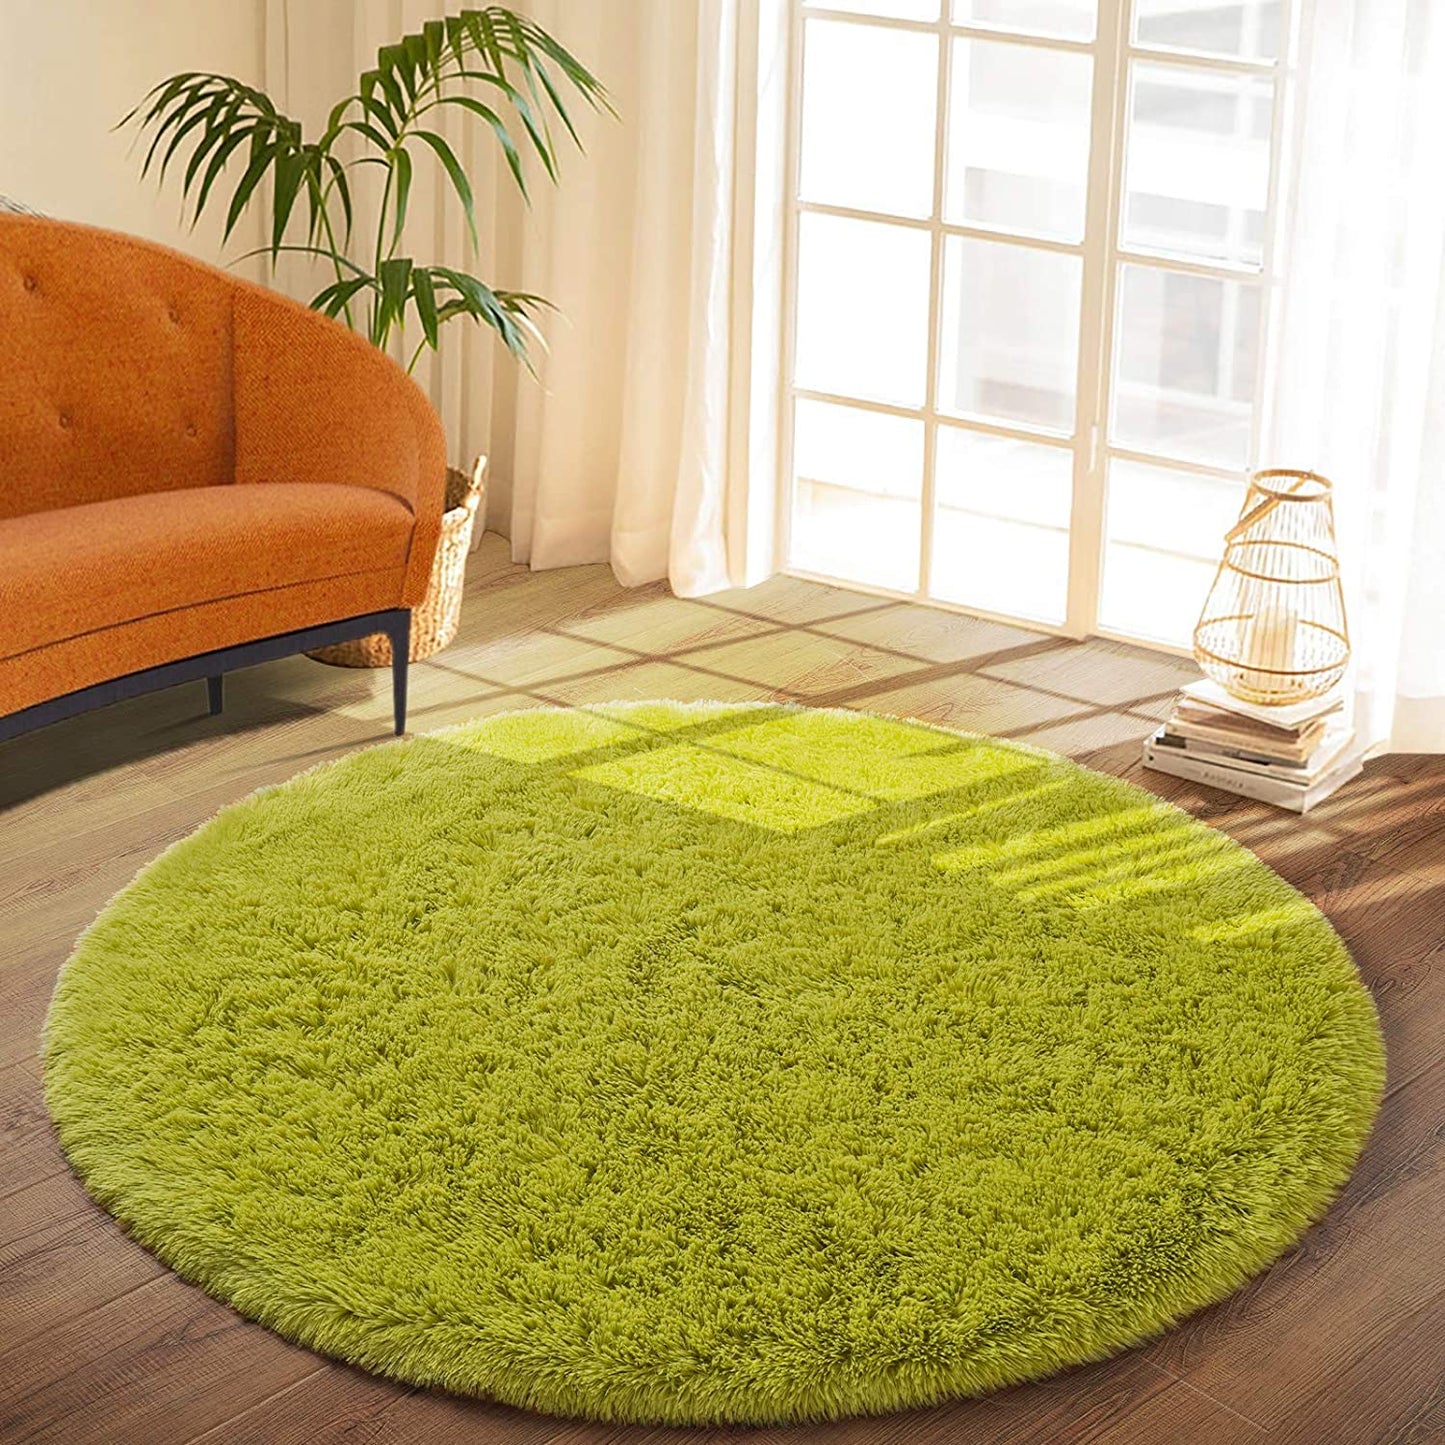 Round plush carpet for Bedroom